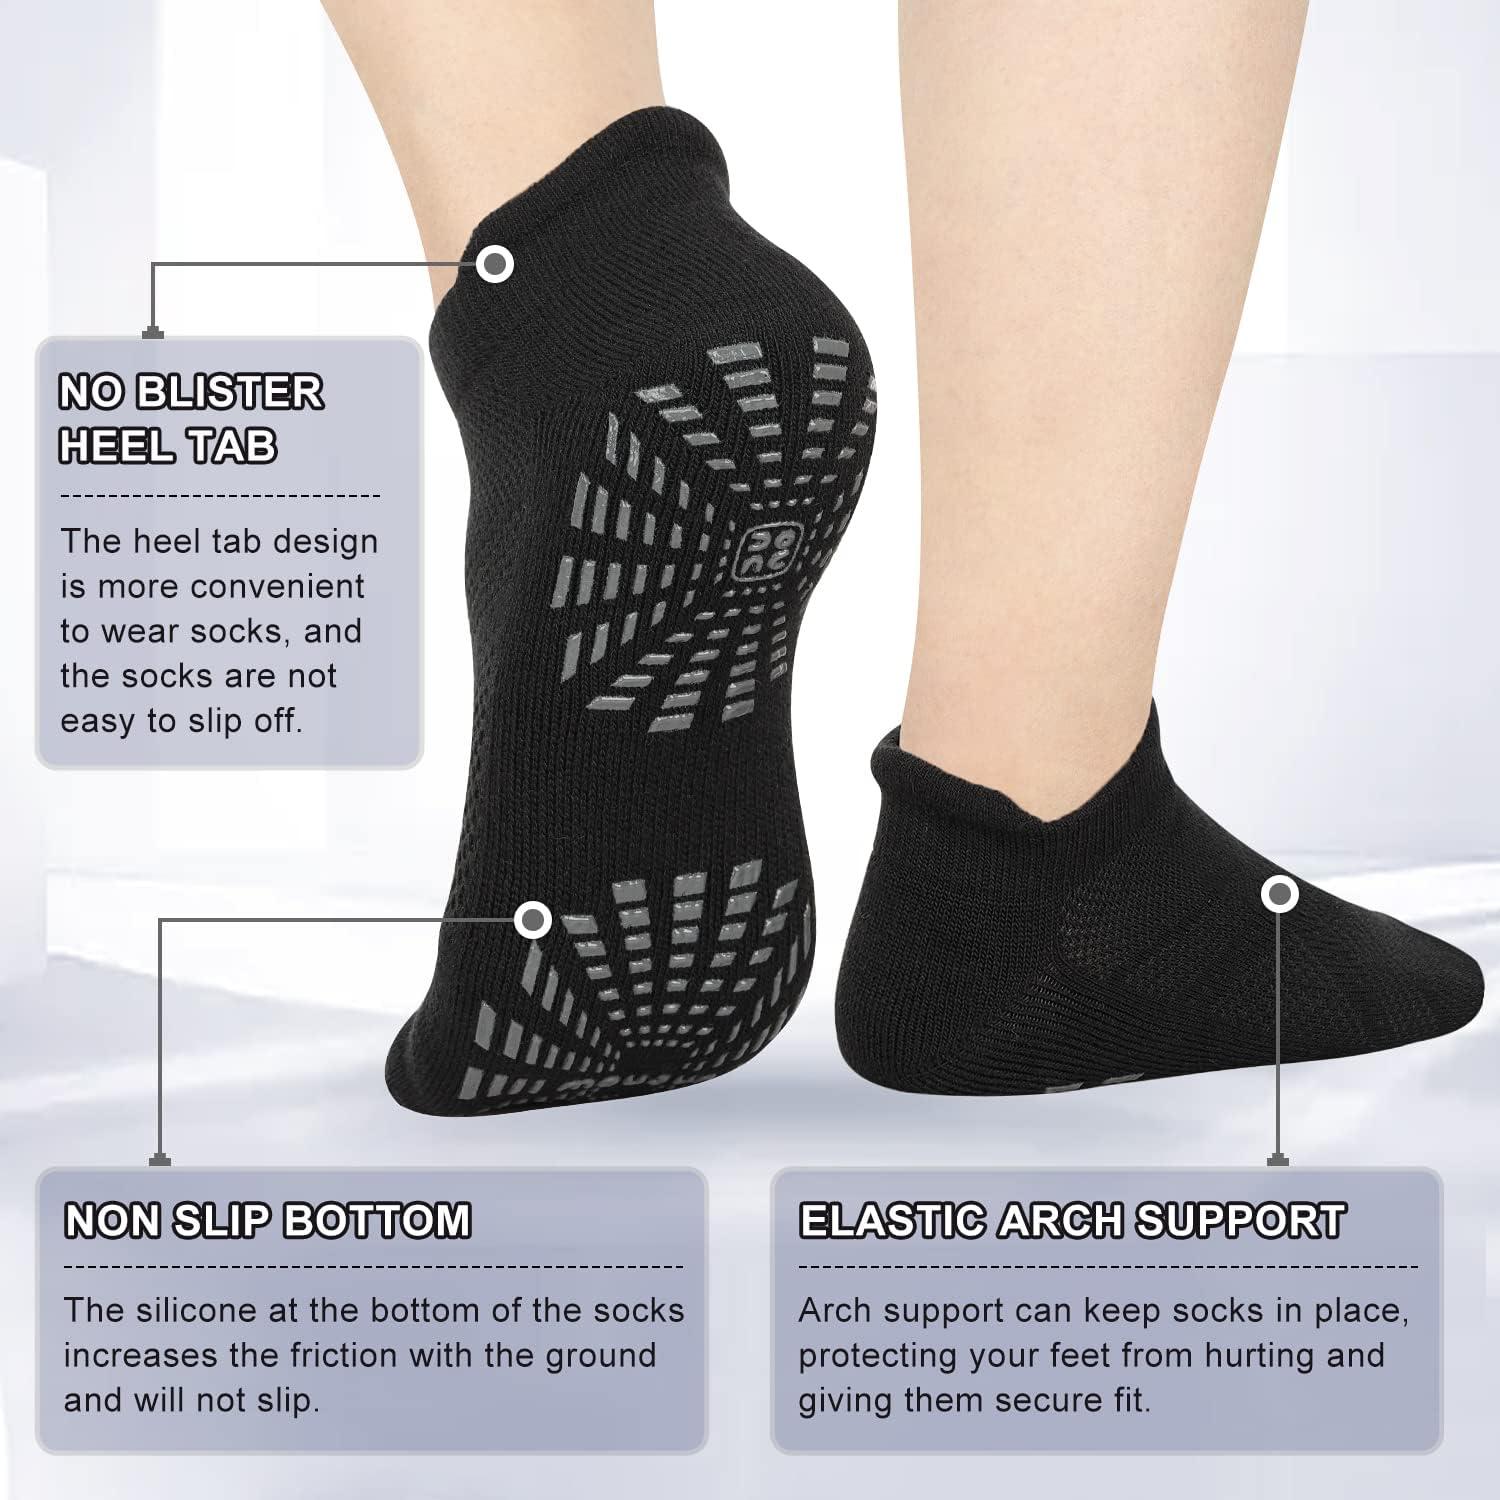 Merino Wool Grip Socks with Cushion, Non Slip Socks for Yoga